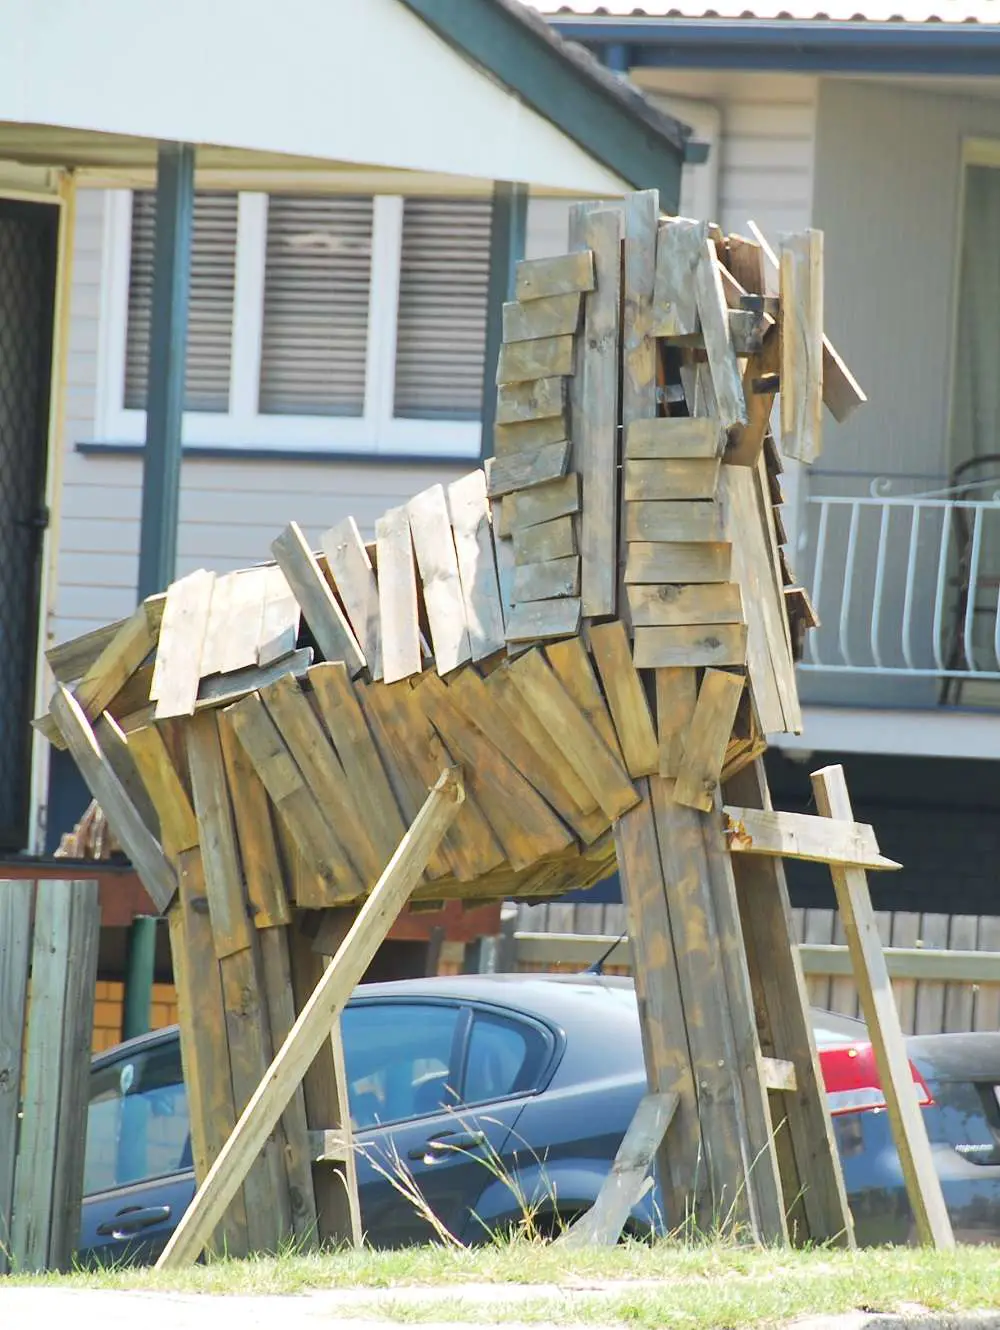 Greek Mythology | Oceania Travel Blog | Greek Mythology - The Trojan Horse. In Someone'S Front Yard... | Oceania Travel Blog | Author: Anthony Bianco - The Travel Tart Blog